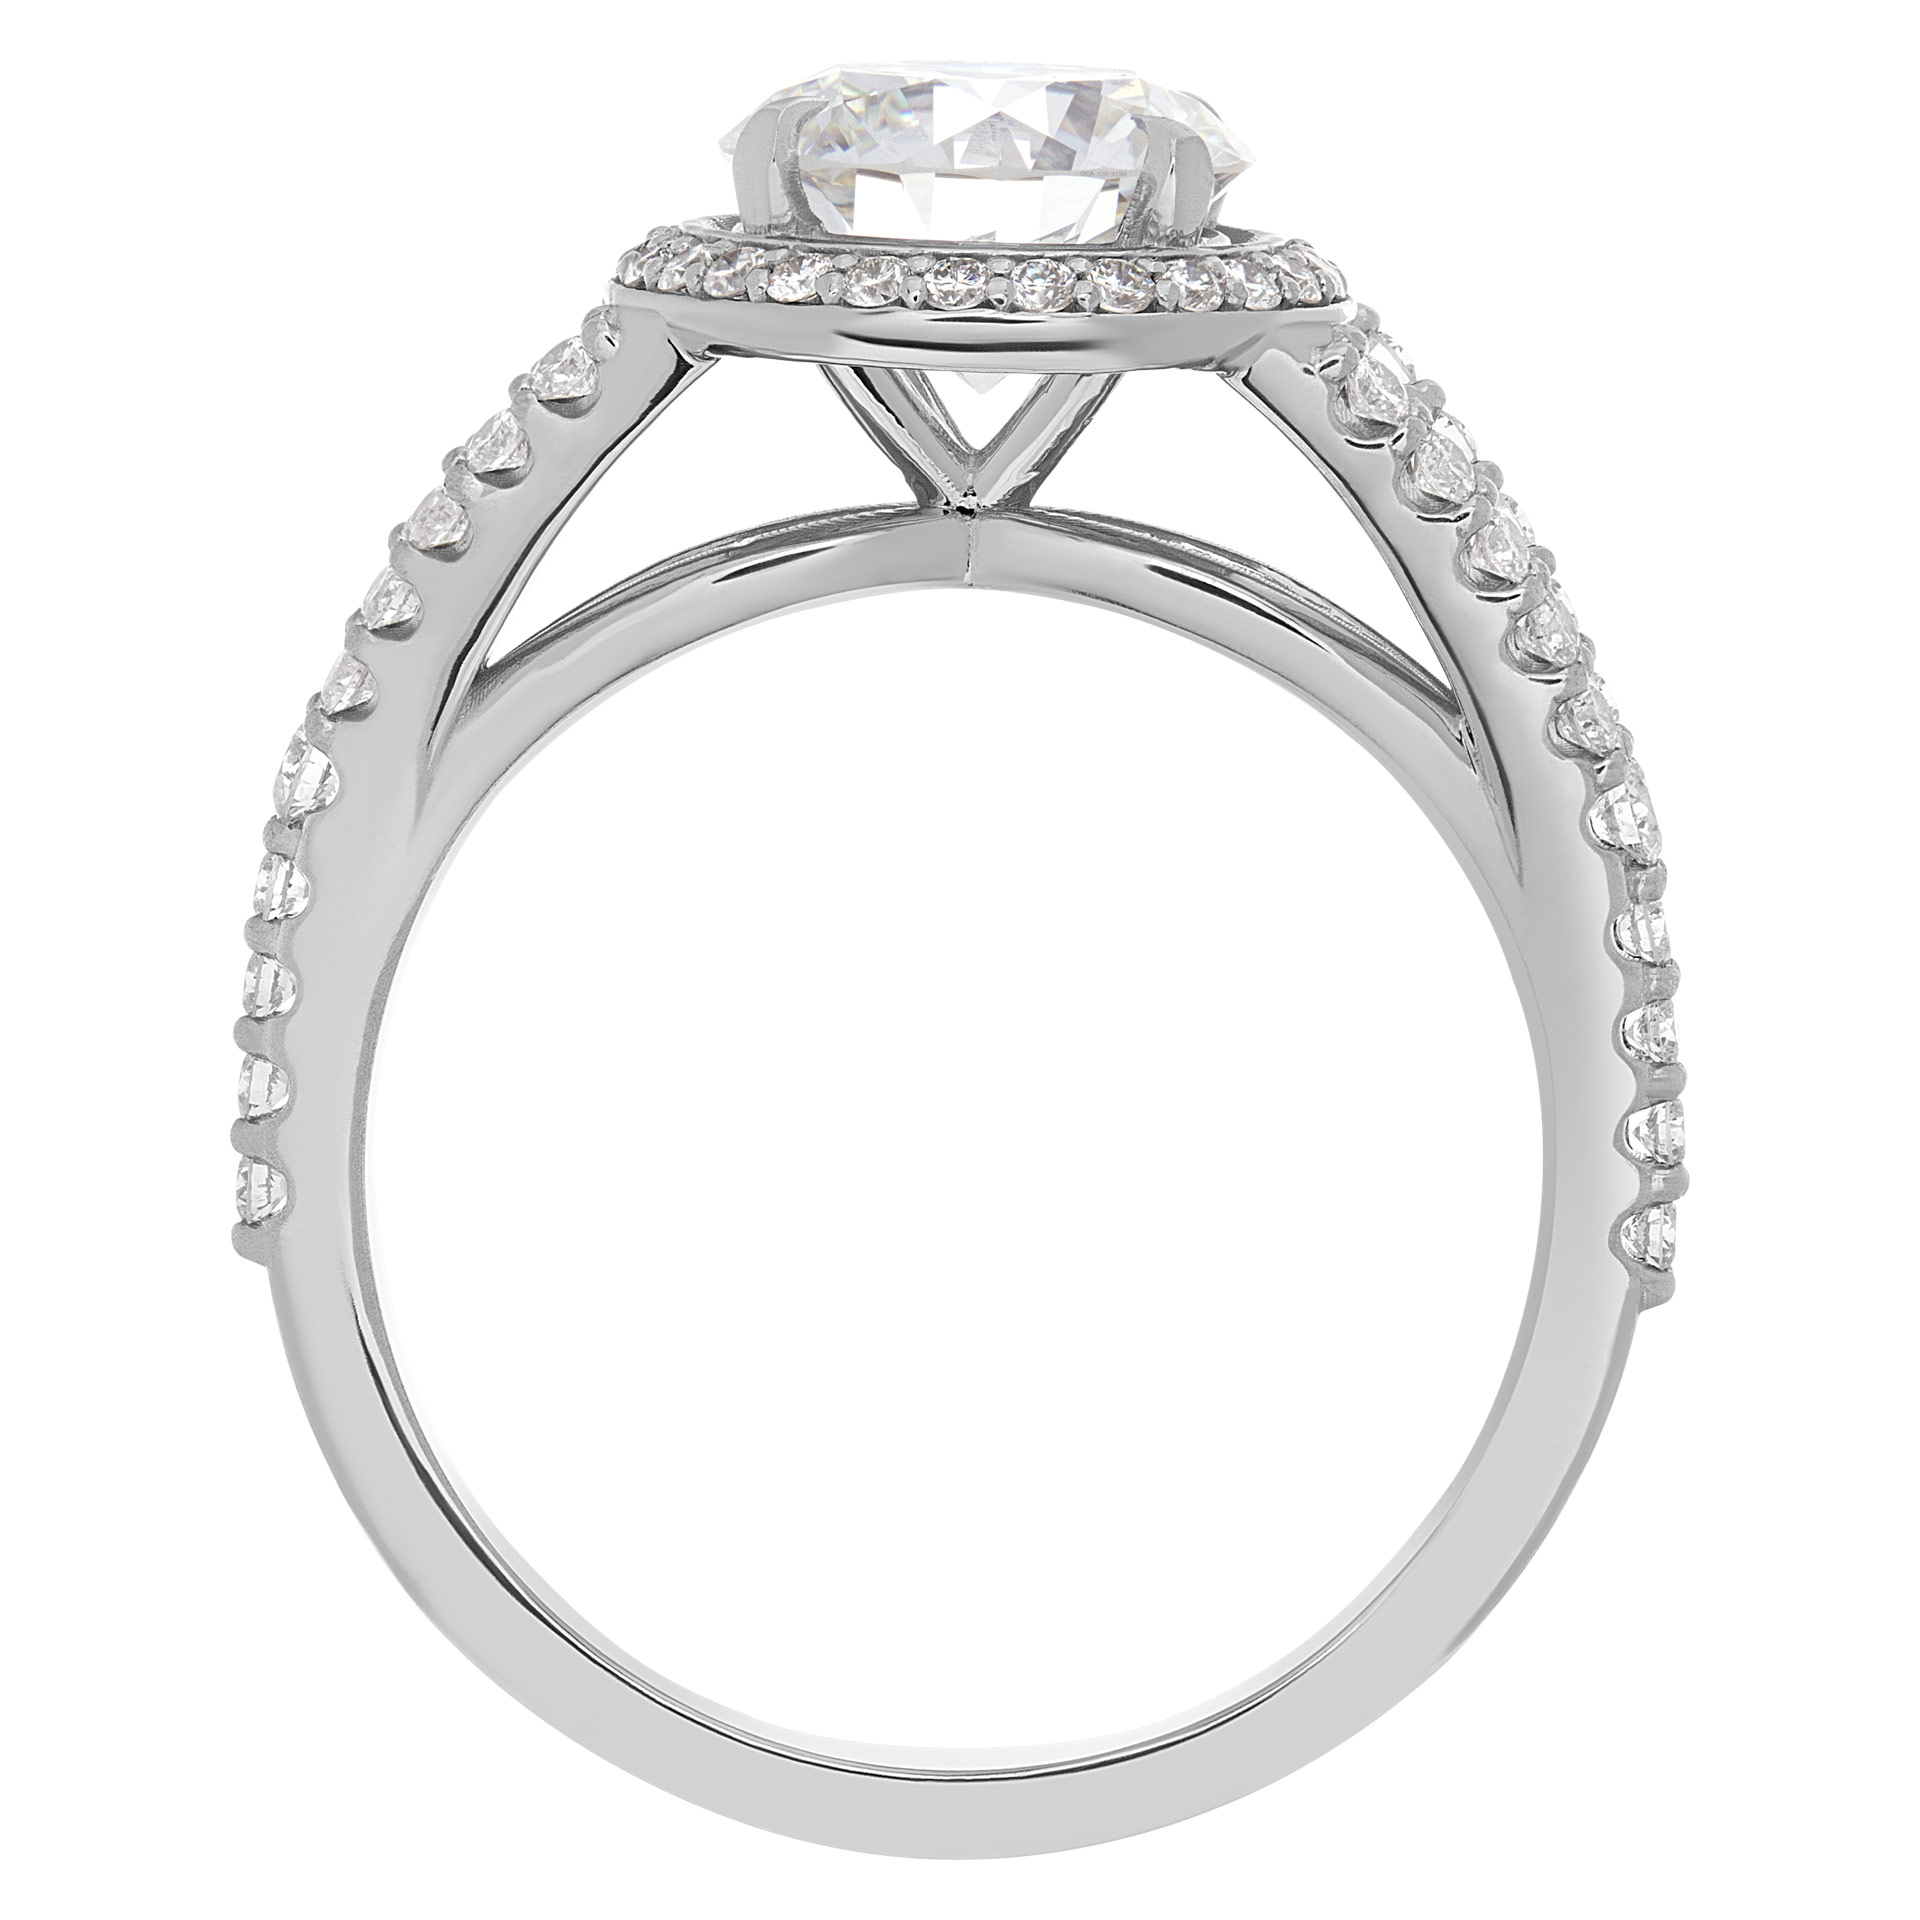 GIA cerified round brilliant cut diamond 1.81 carat (J color, SI2 clarity, Excellent symmetry) ring image 4